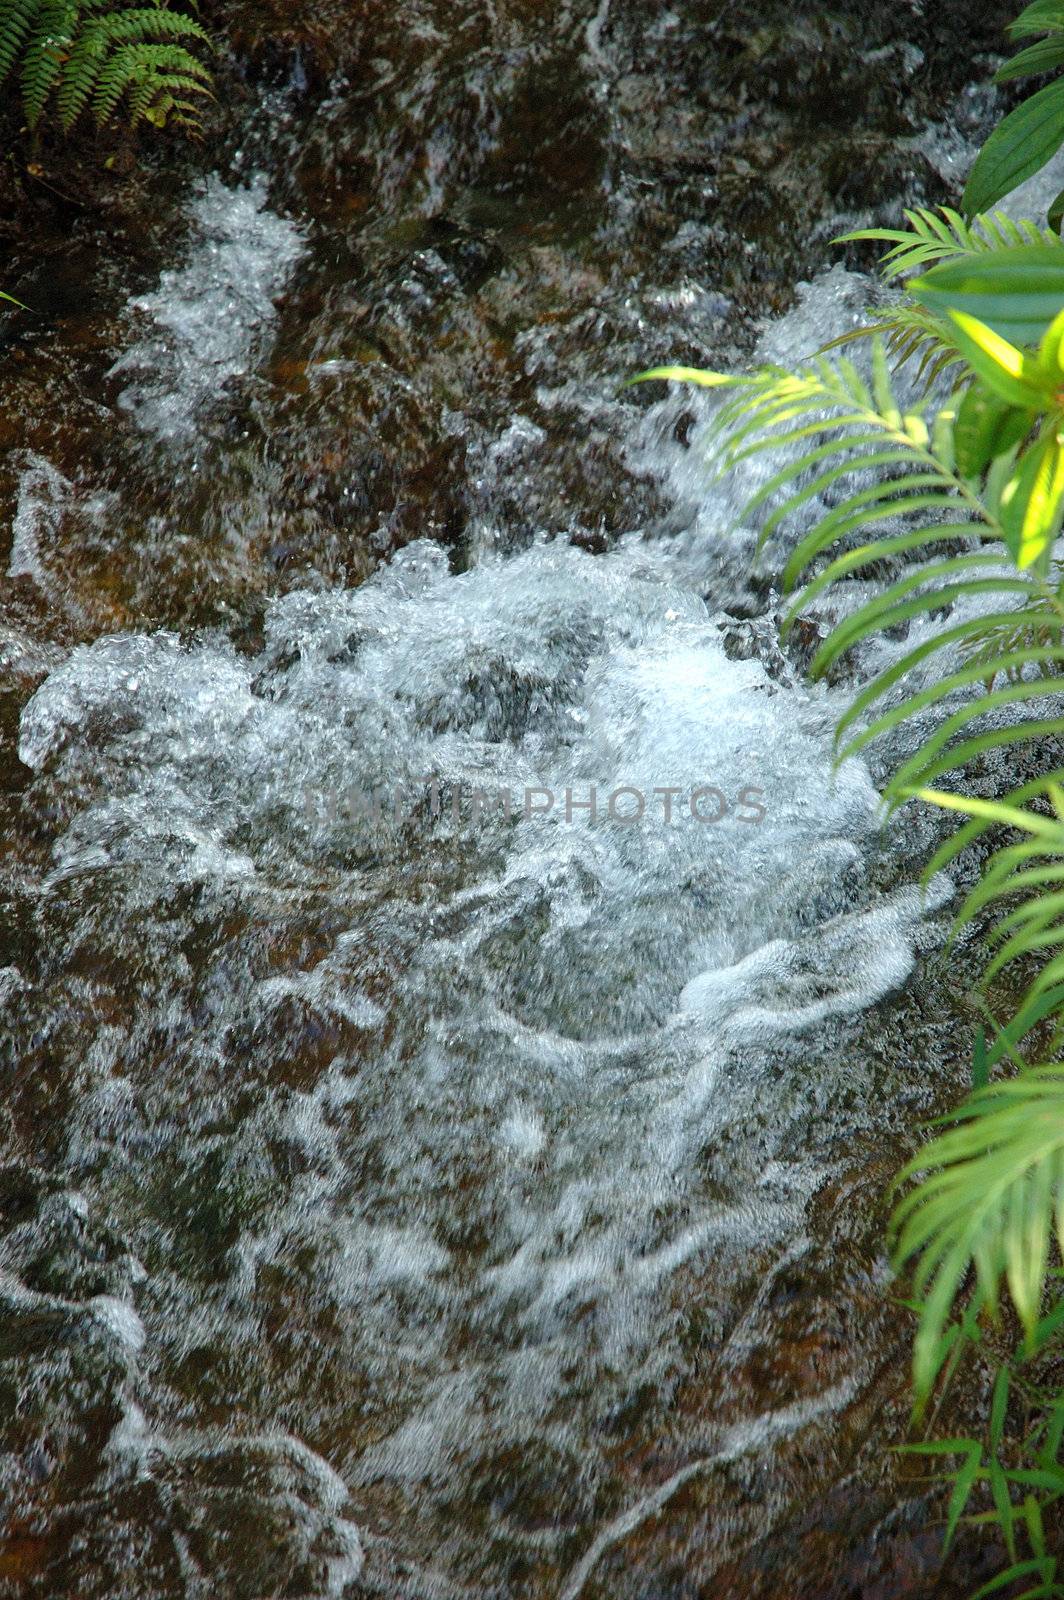 Forest stream running over mossy rocks